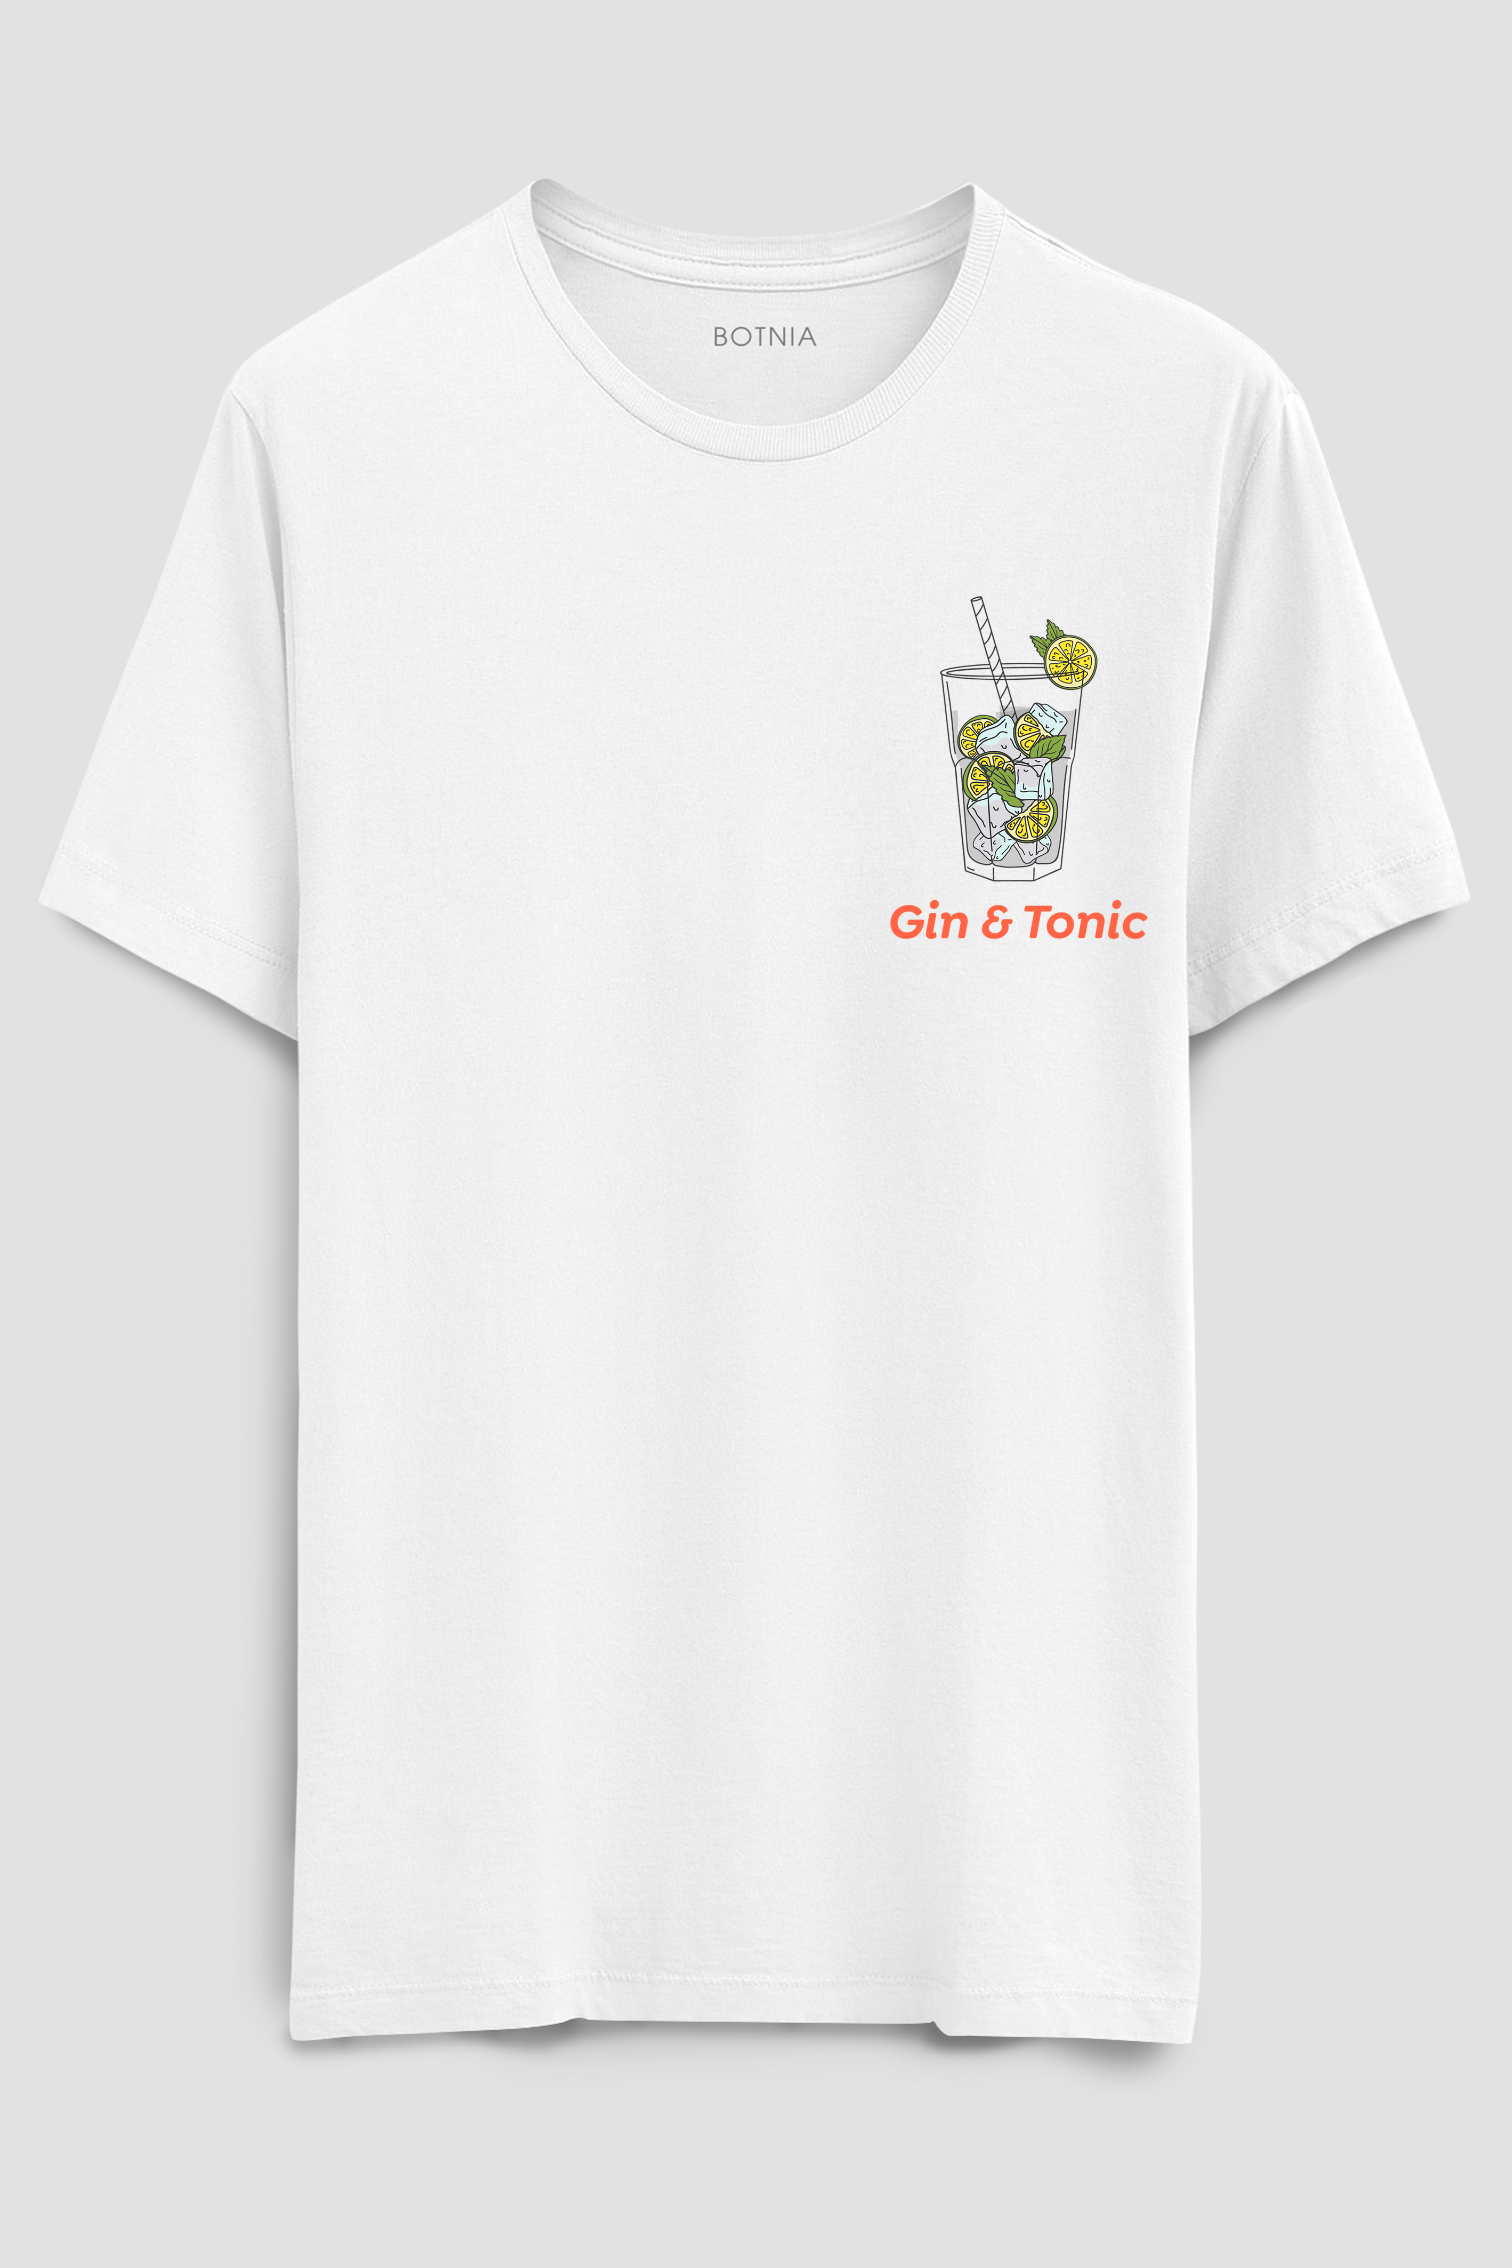 Gin & Tonic- Half sleeve t-shirt